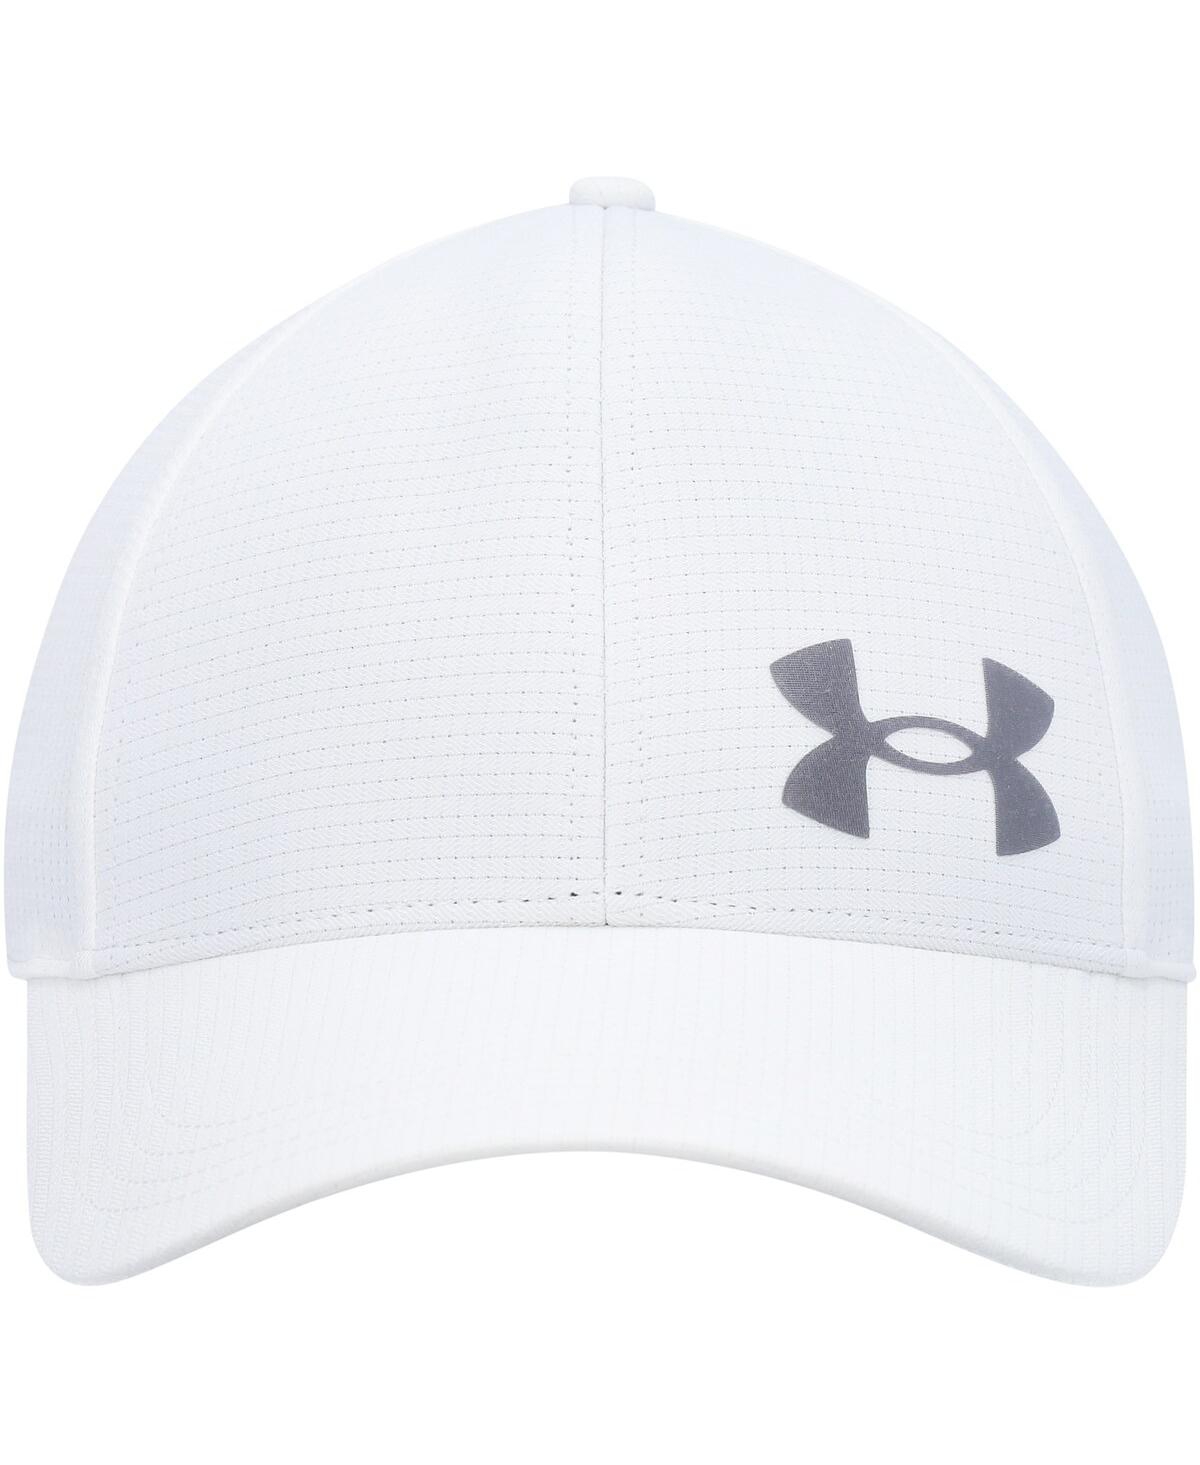 Shop Under Armour Men's  White Flawless Performance Flex Hat